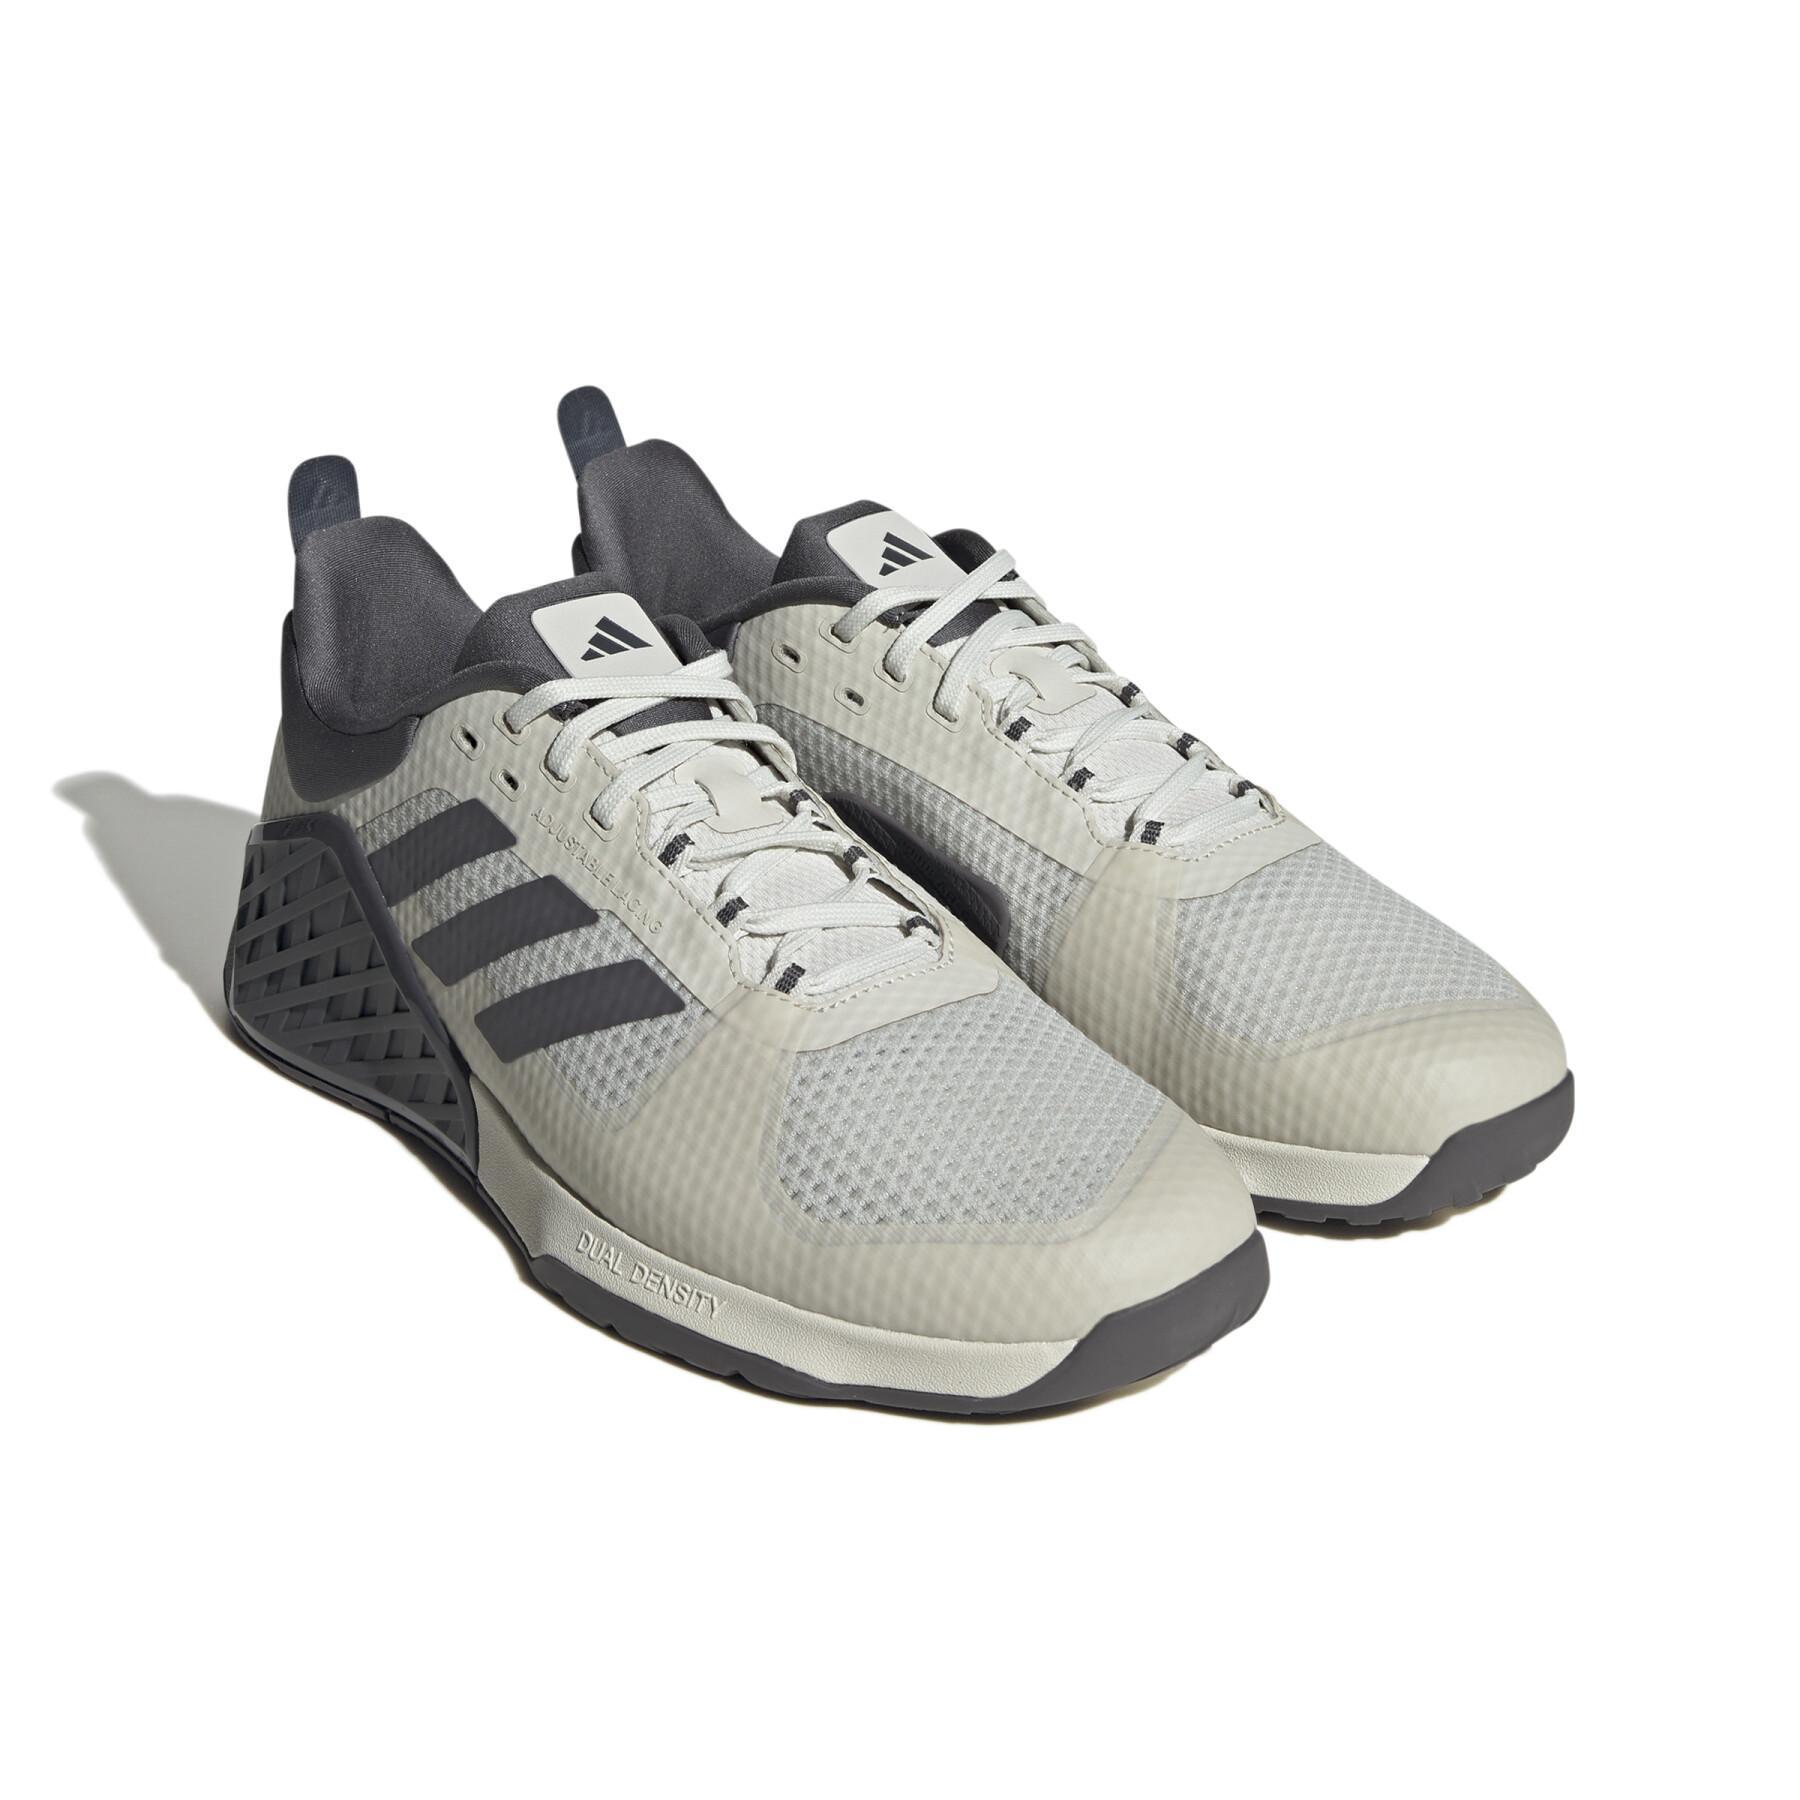 CrossFit Schuhe adidas Dropset 2